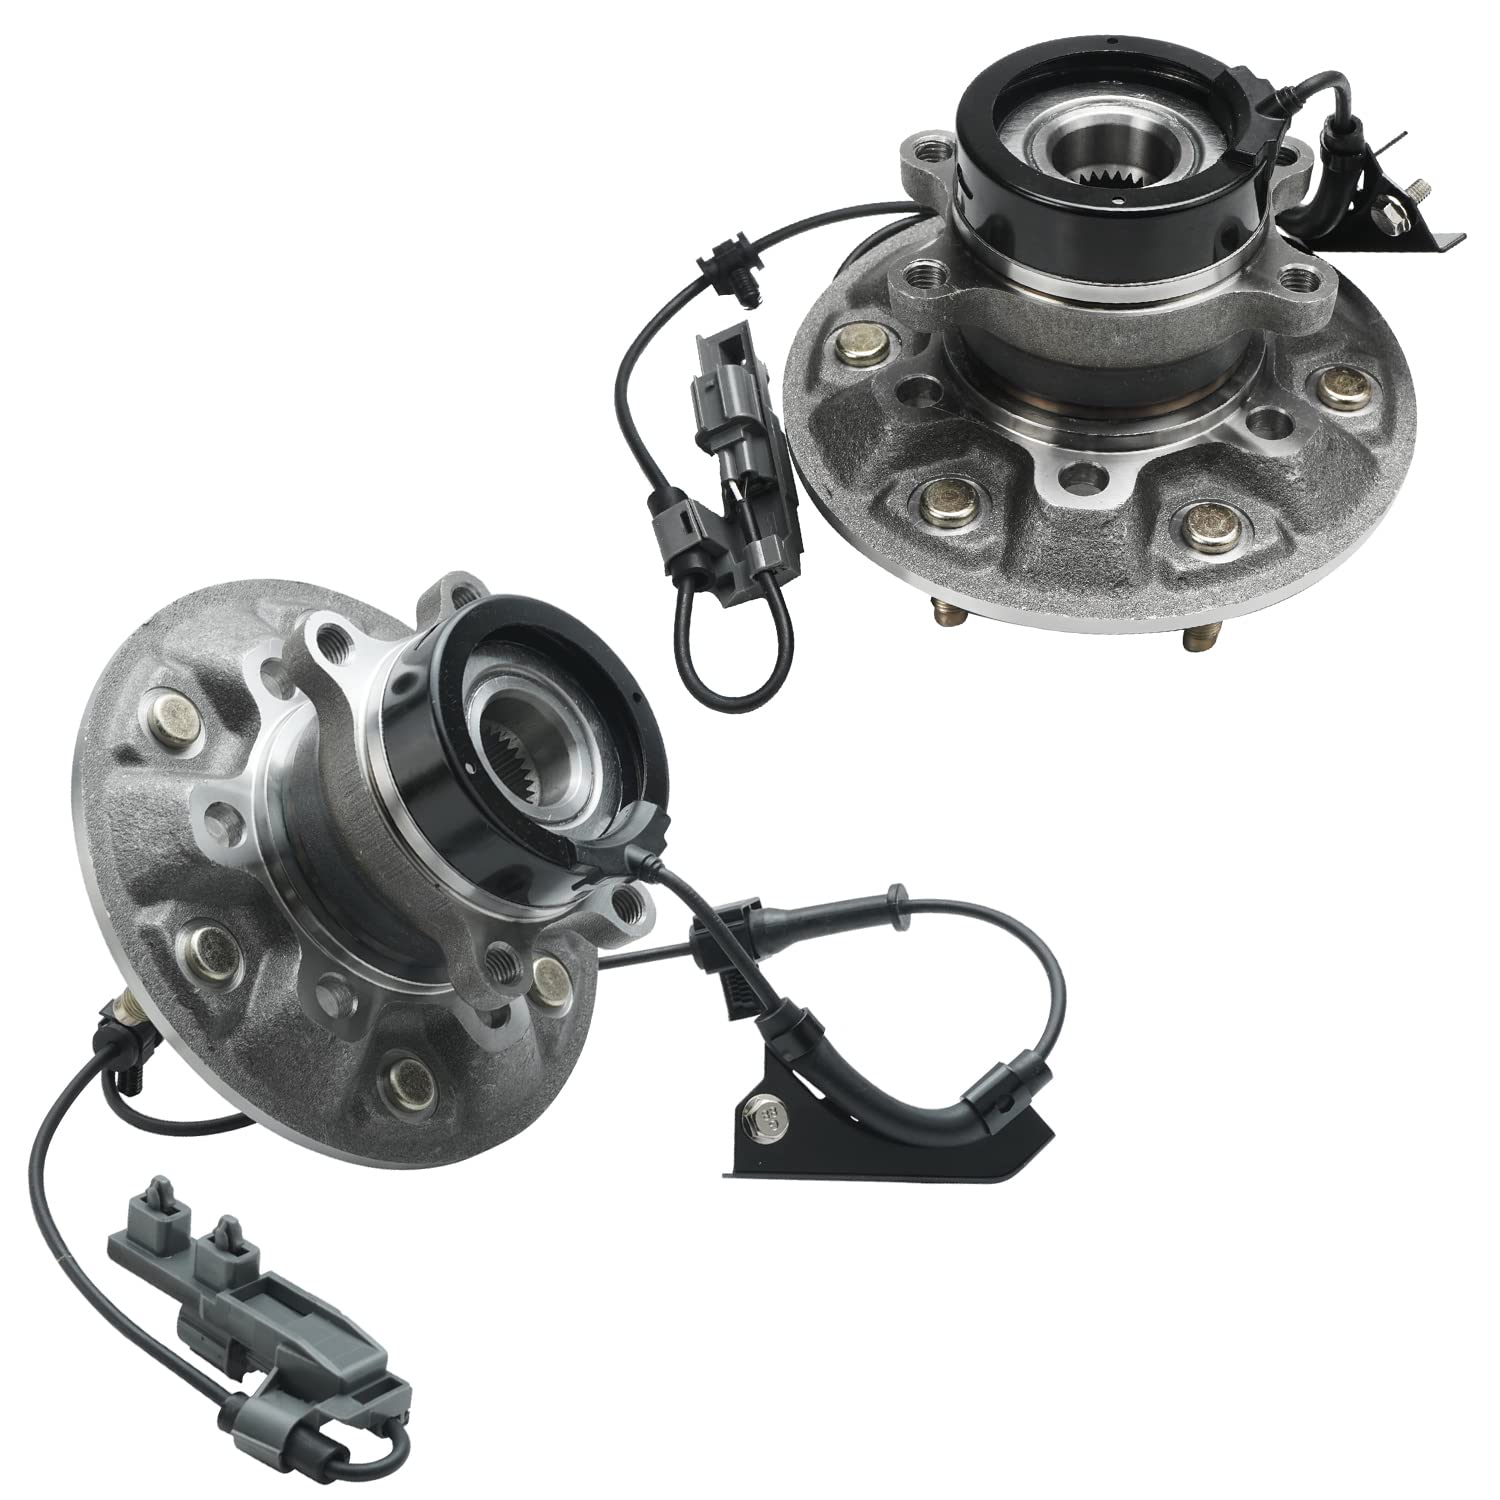 Amazon.com: Detroit Axle - 4WD Front Left Wheel Hub Bearing Assemblies  Replacement for Chevy Colorado Isuzu I350 I370 GMC Canyon - 2pc Set :  Automotive